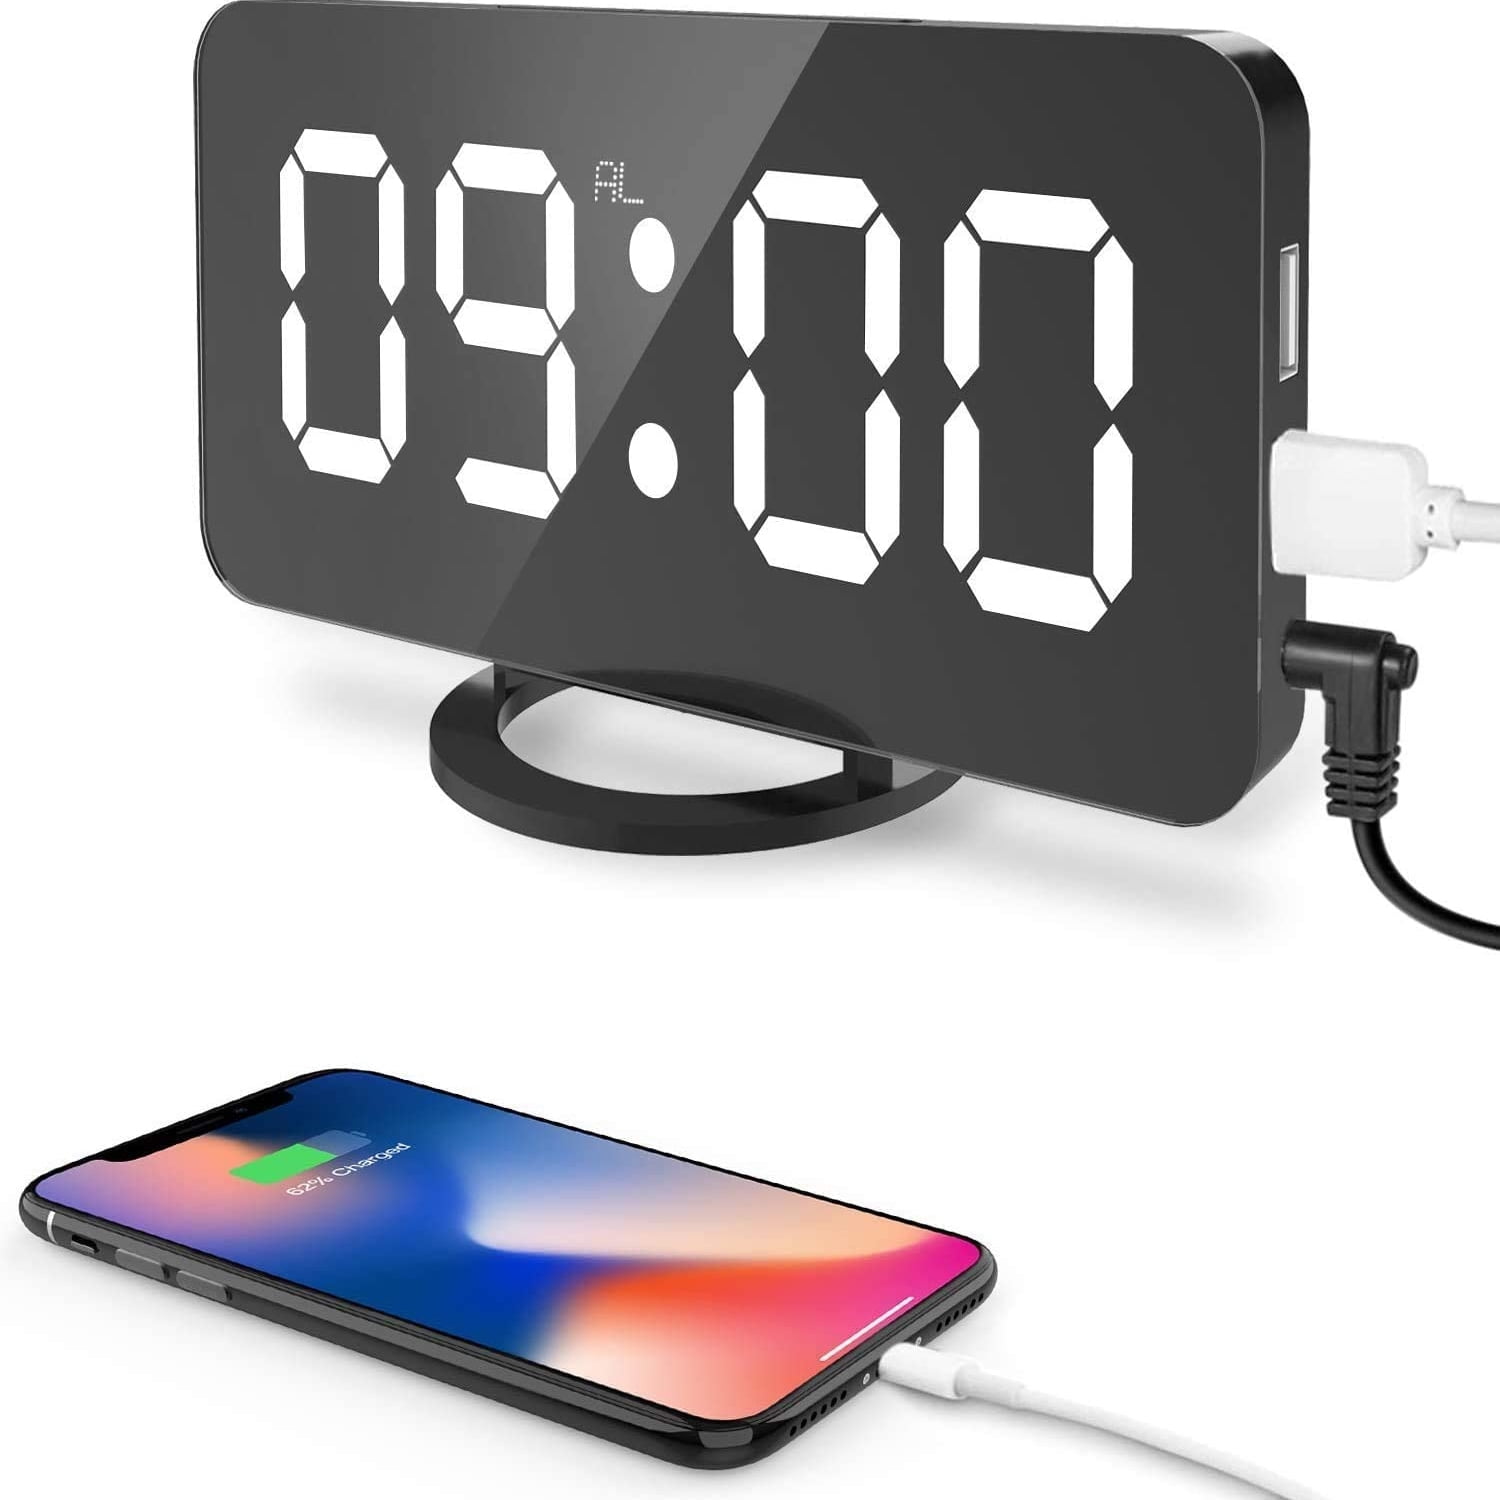 Large LED Digital Alarm Clock Desk Table Wall Snooze Clock 3D Display USB 12/24H 